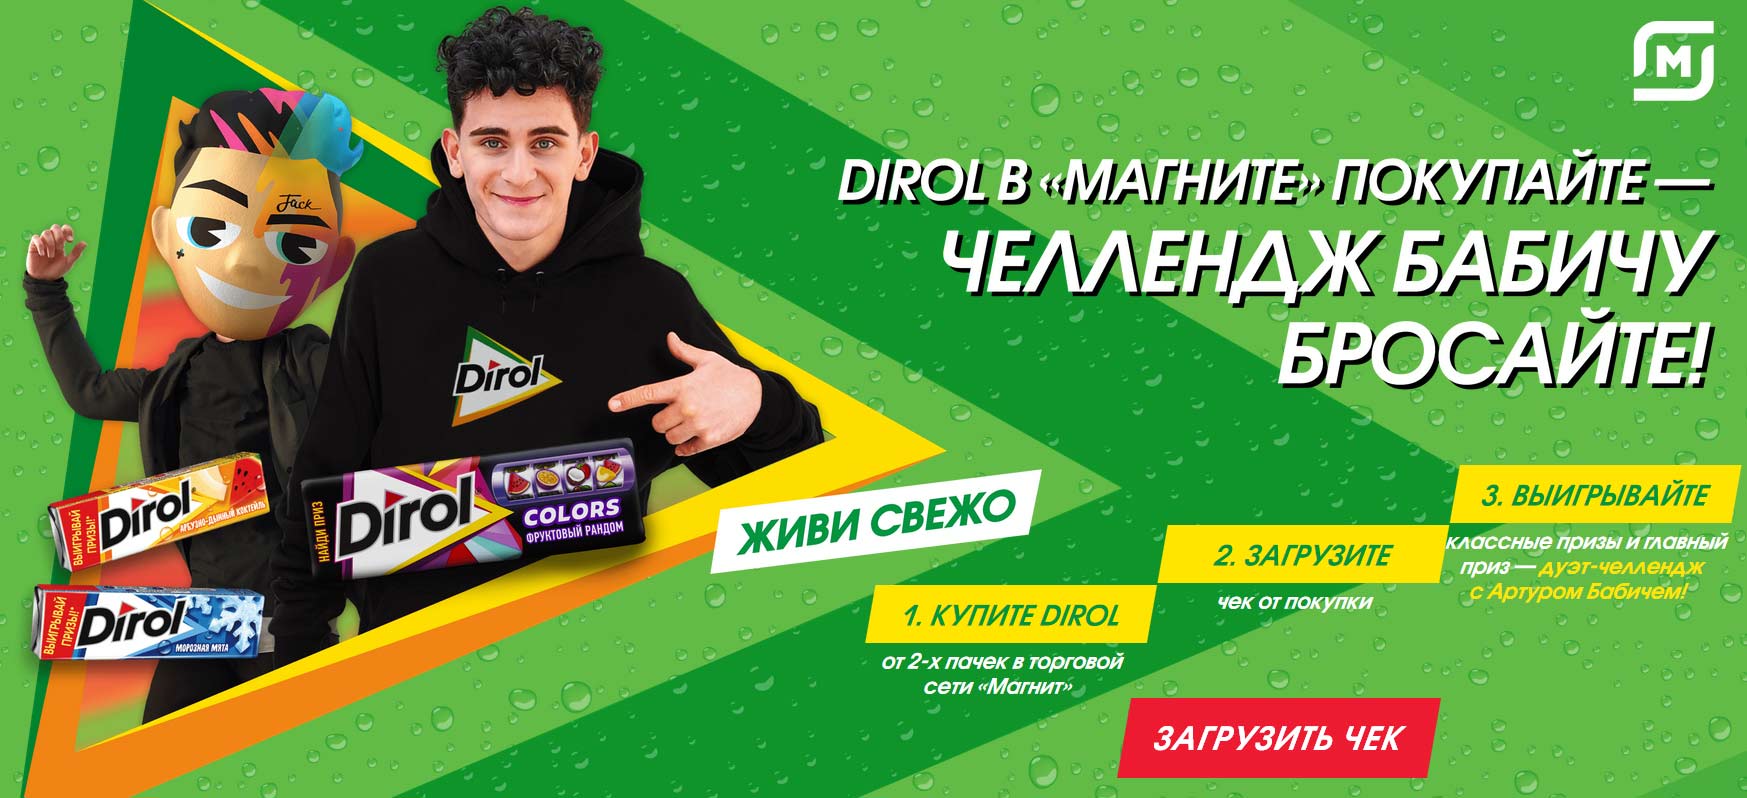 www.magnit.dirol-promo.ru регистрация